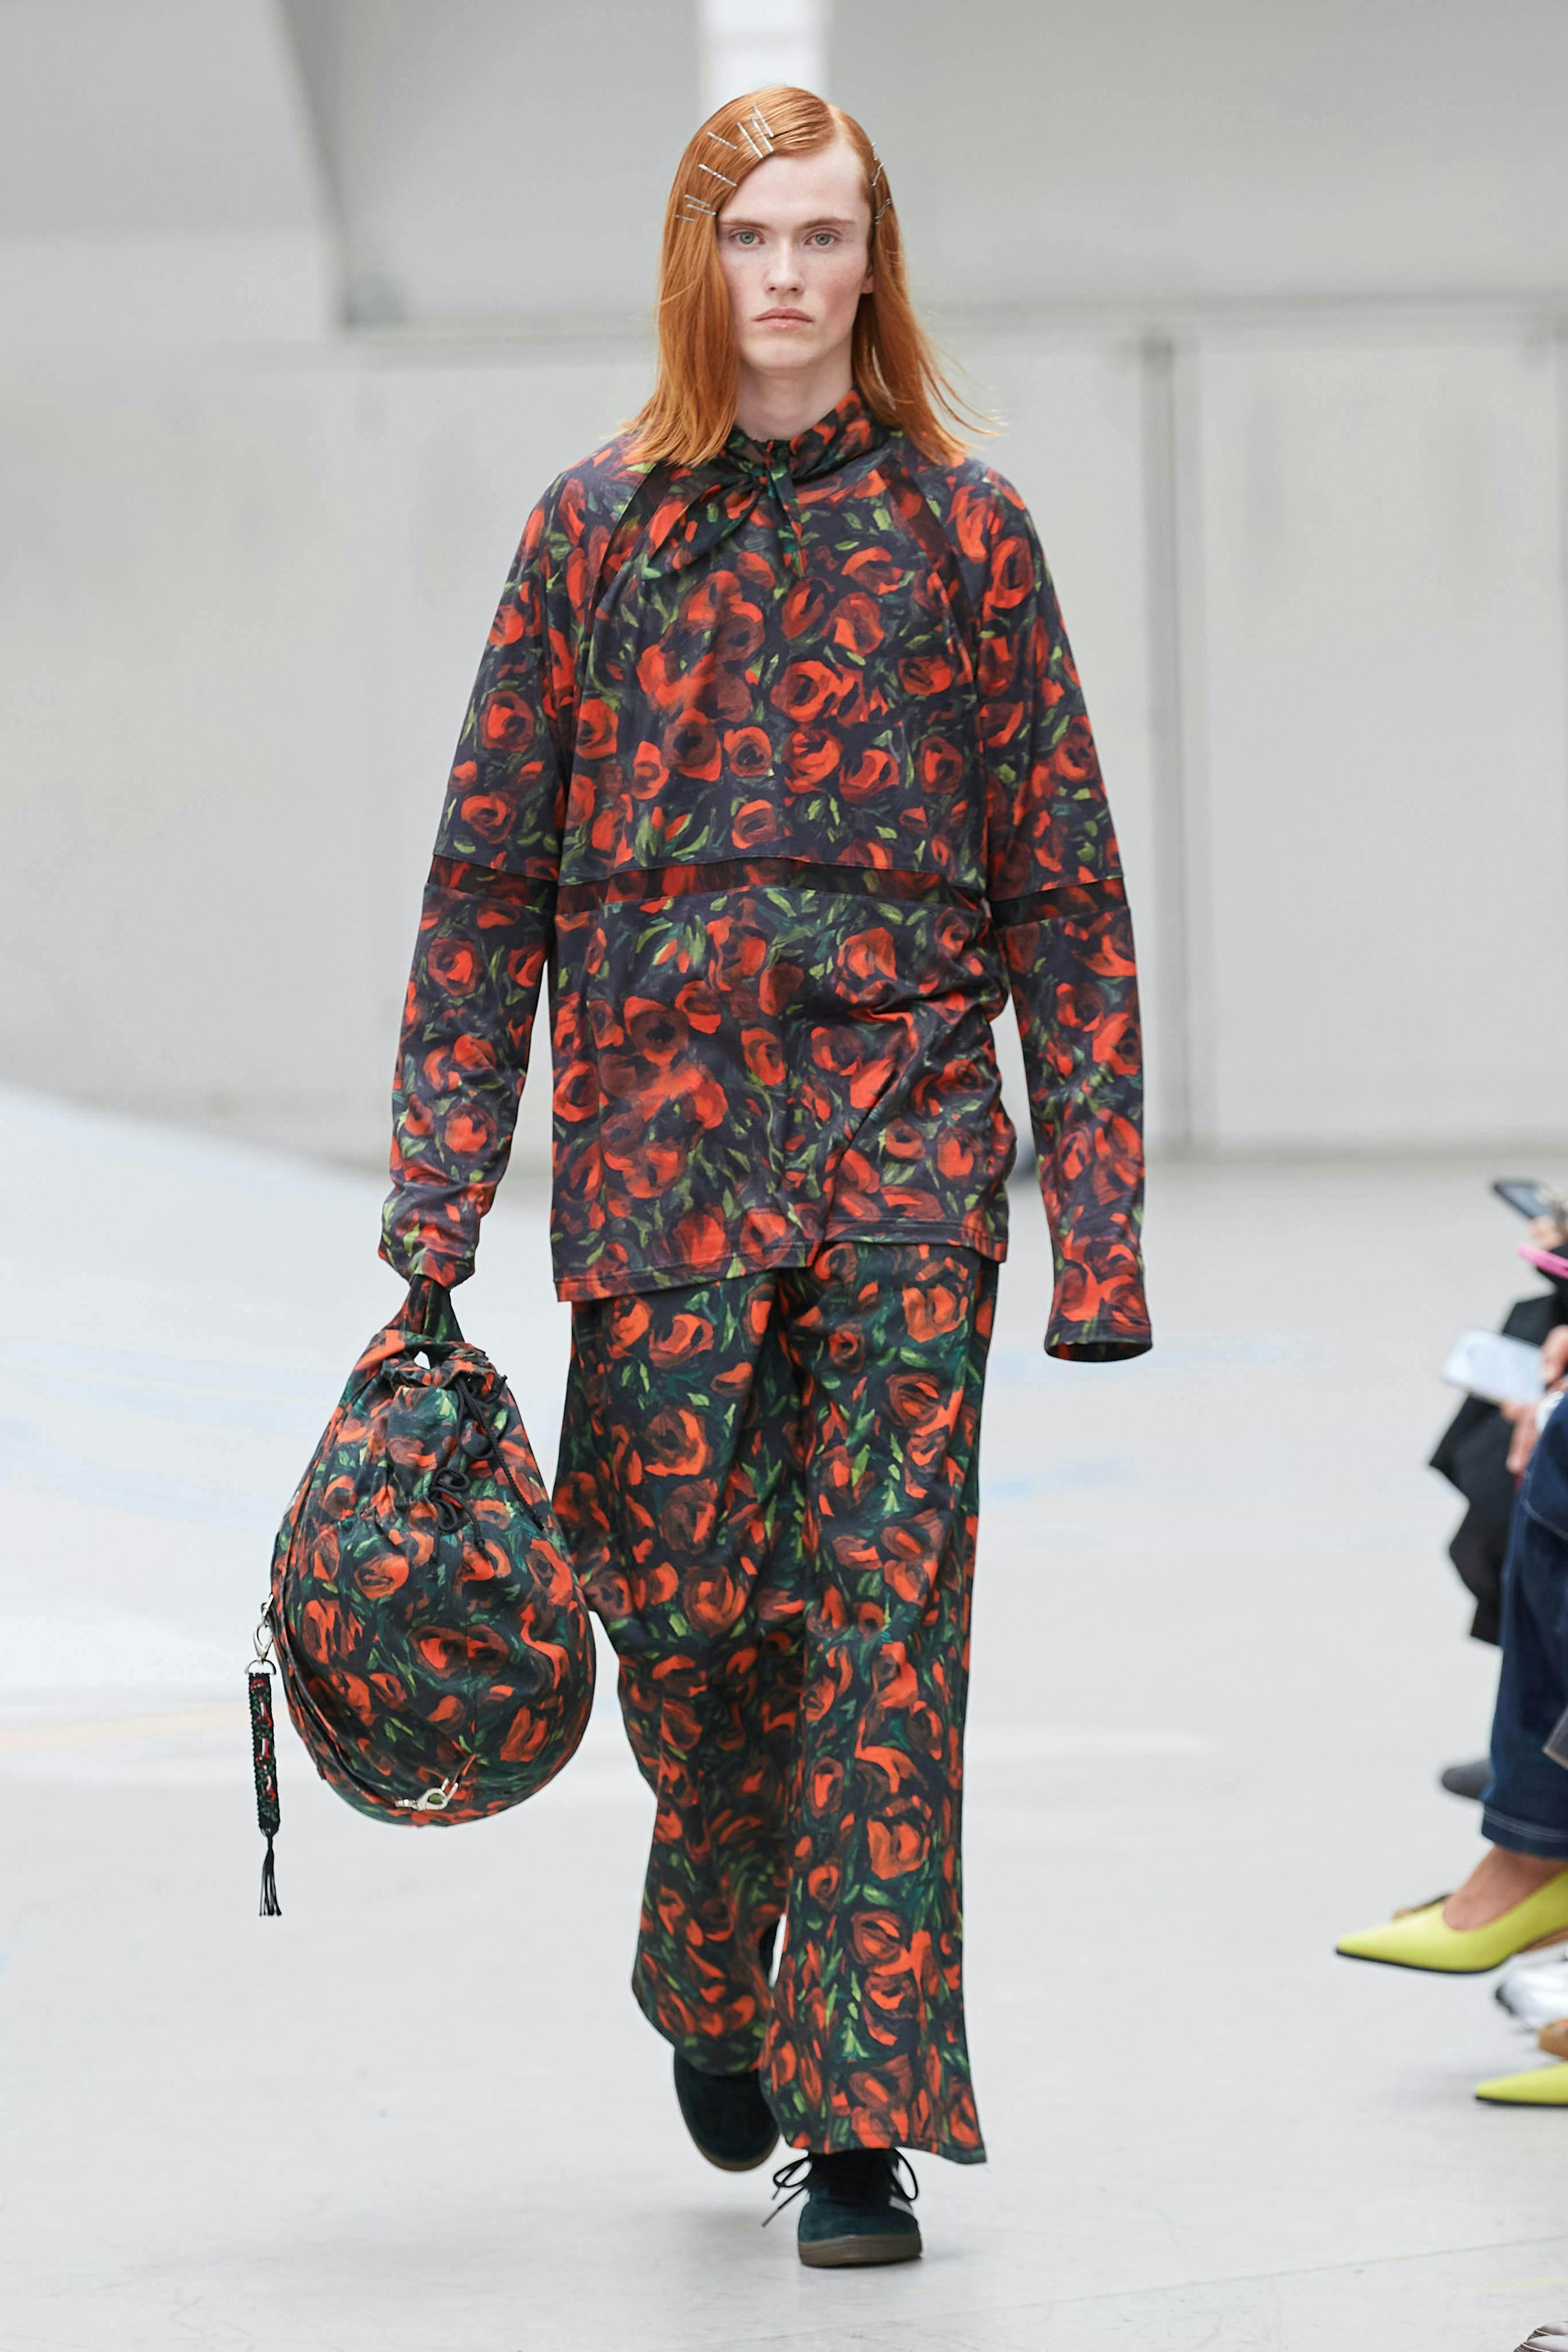 long sleeve sleeve fashion formal wear suit bag handbag pajamas person dress